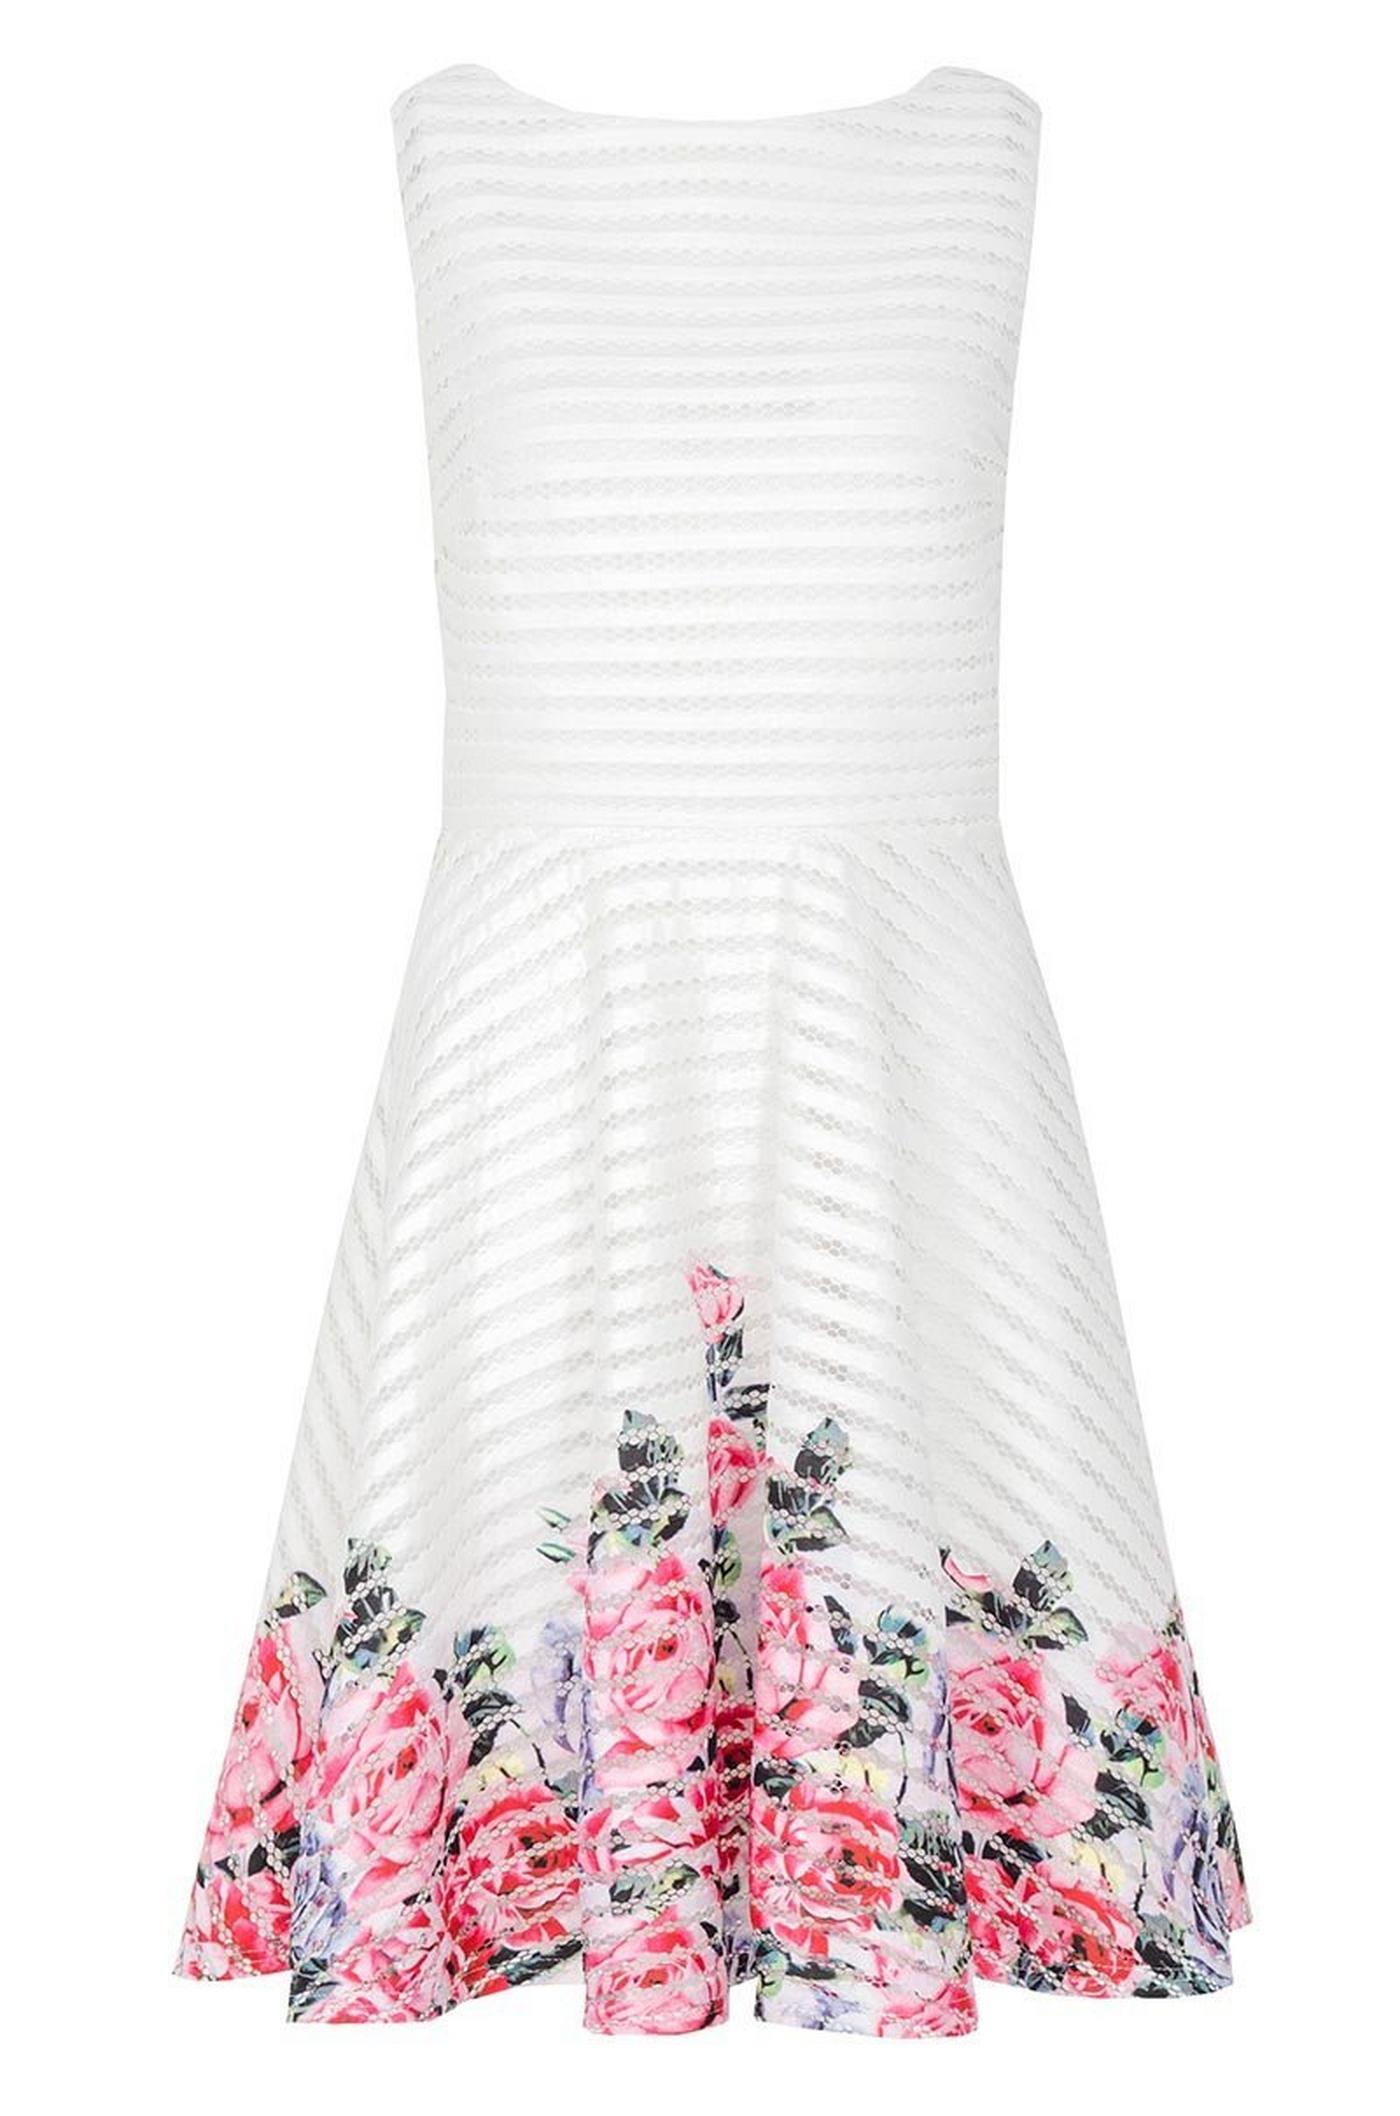 Cream And Pink Flower Print Hem Skater Dress